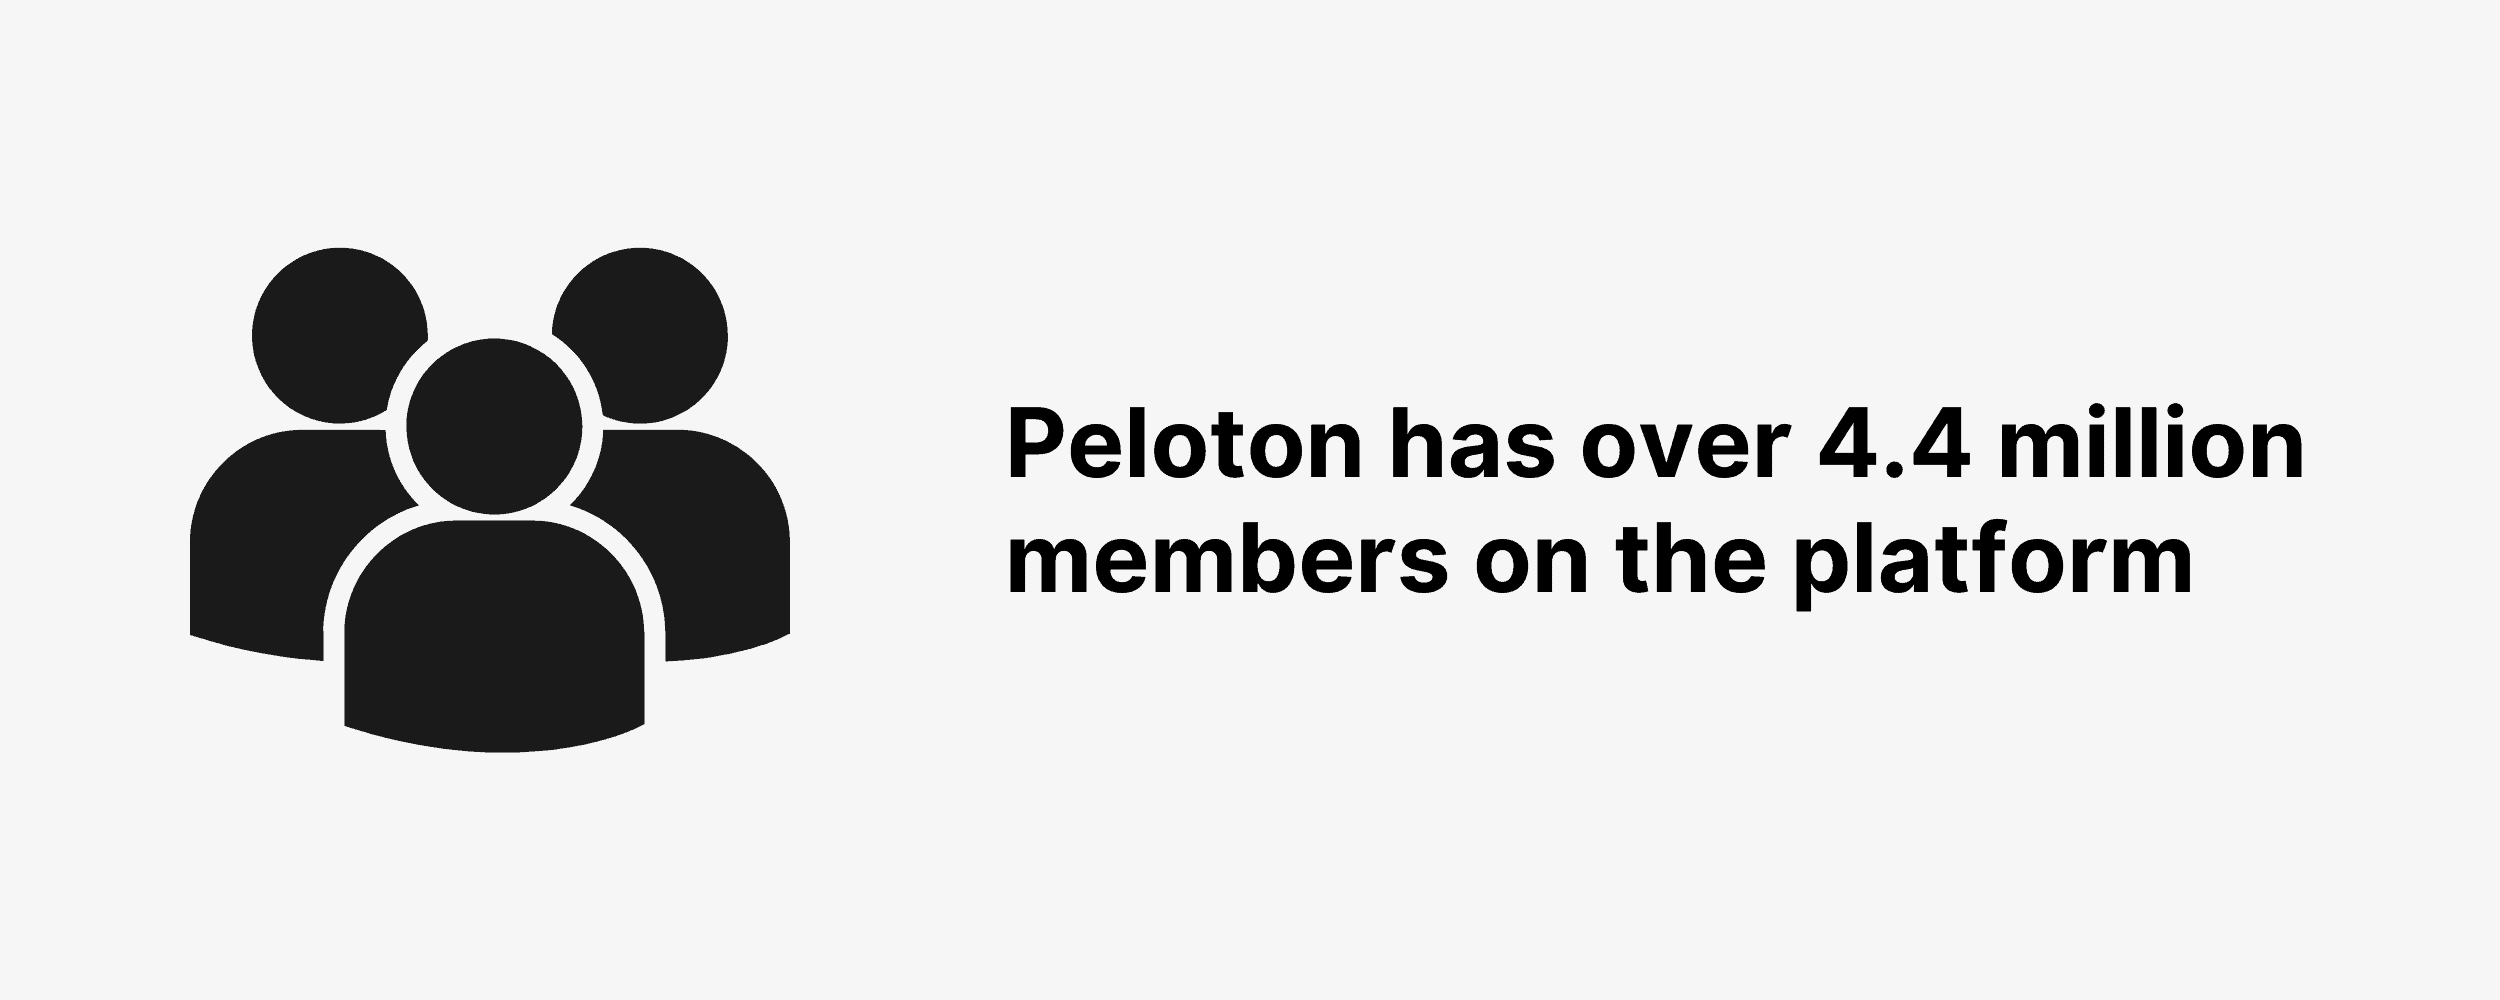 Peloton has over 4.4 million members on the platform